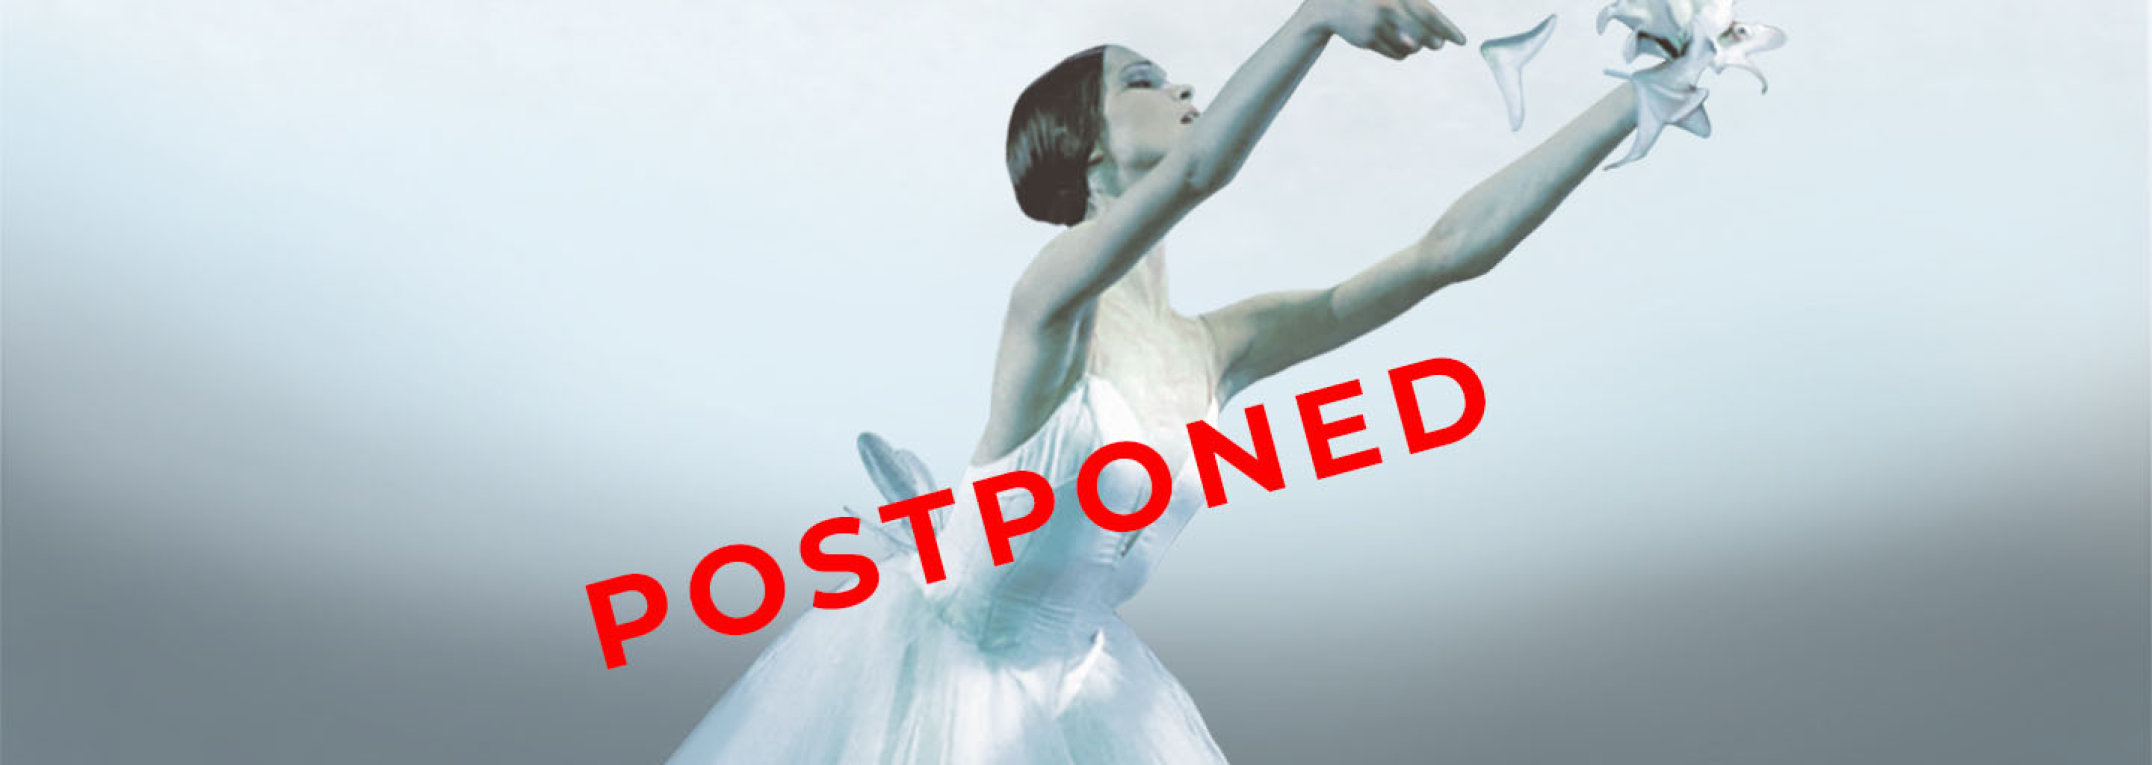 Premiere Performances of “Giselle” Postponed